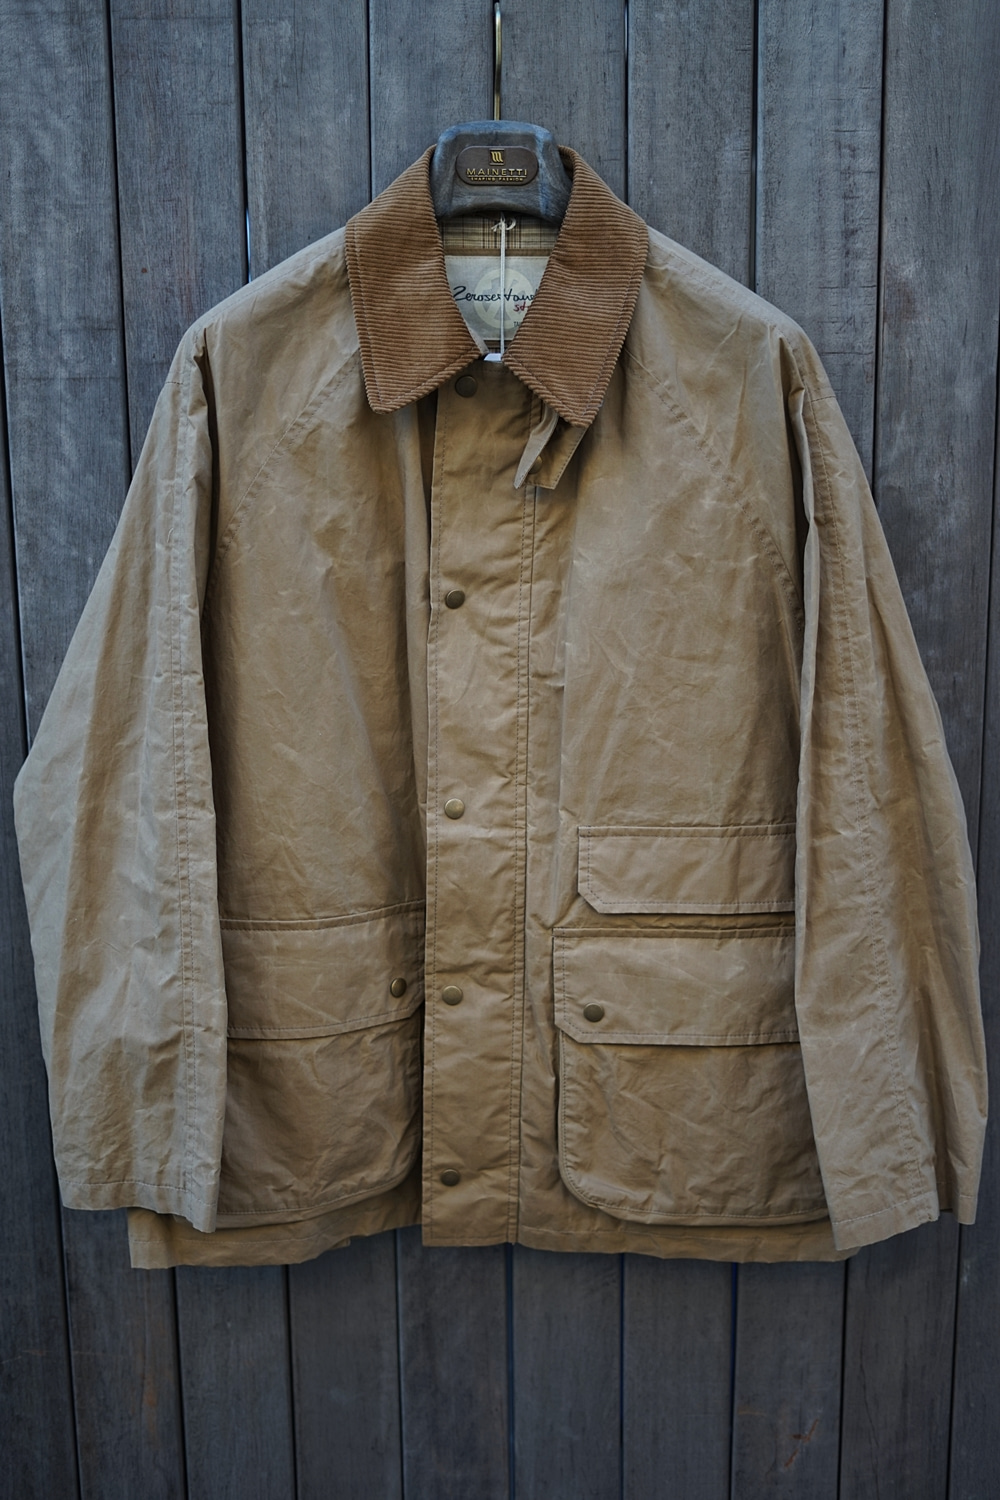 M+ 249 wax cotton Field jacketLimpermeabile(임페르미아빌레)